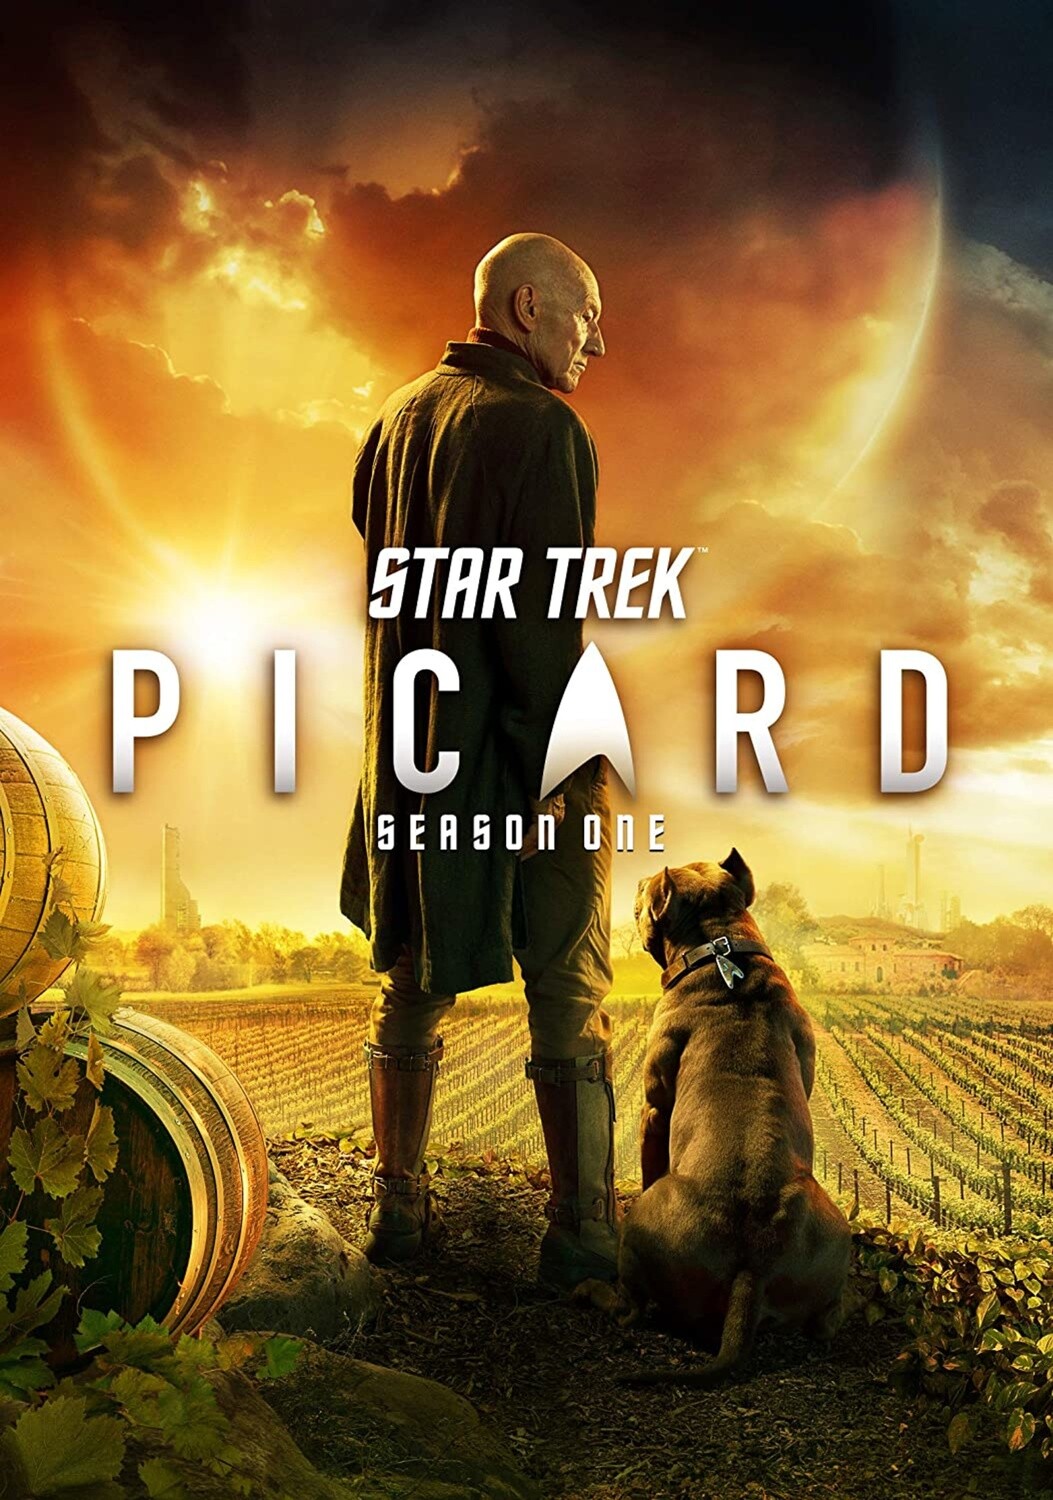 Star Trek Picard Season One (7 day Dvd rental)